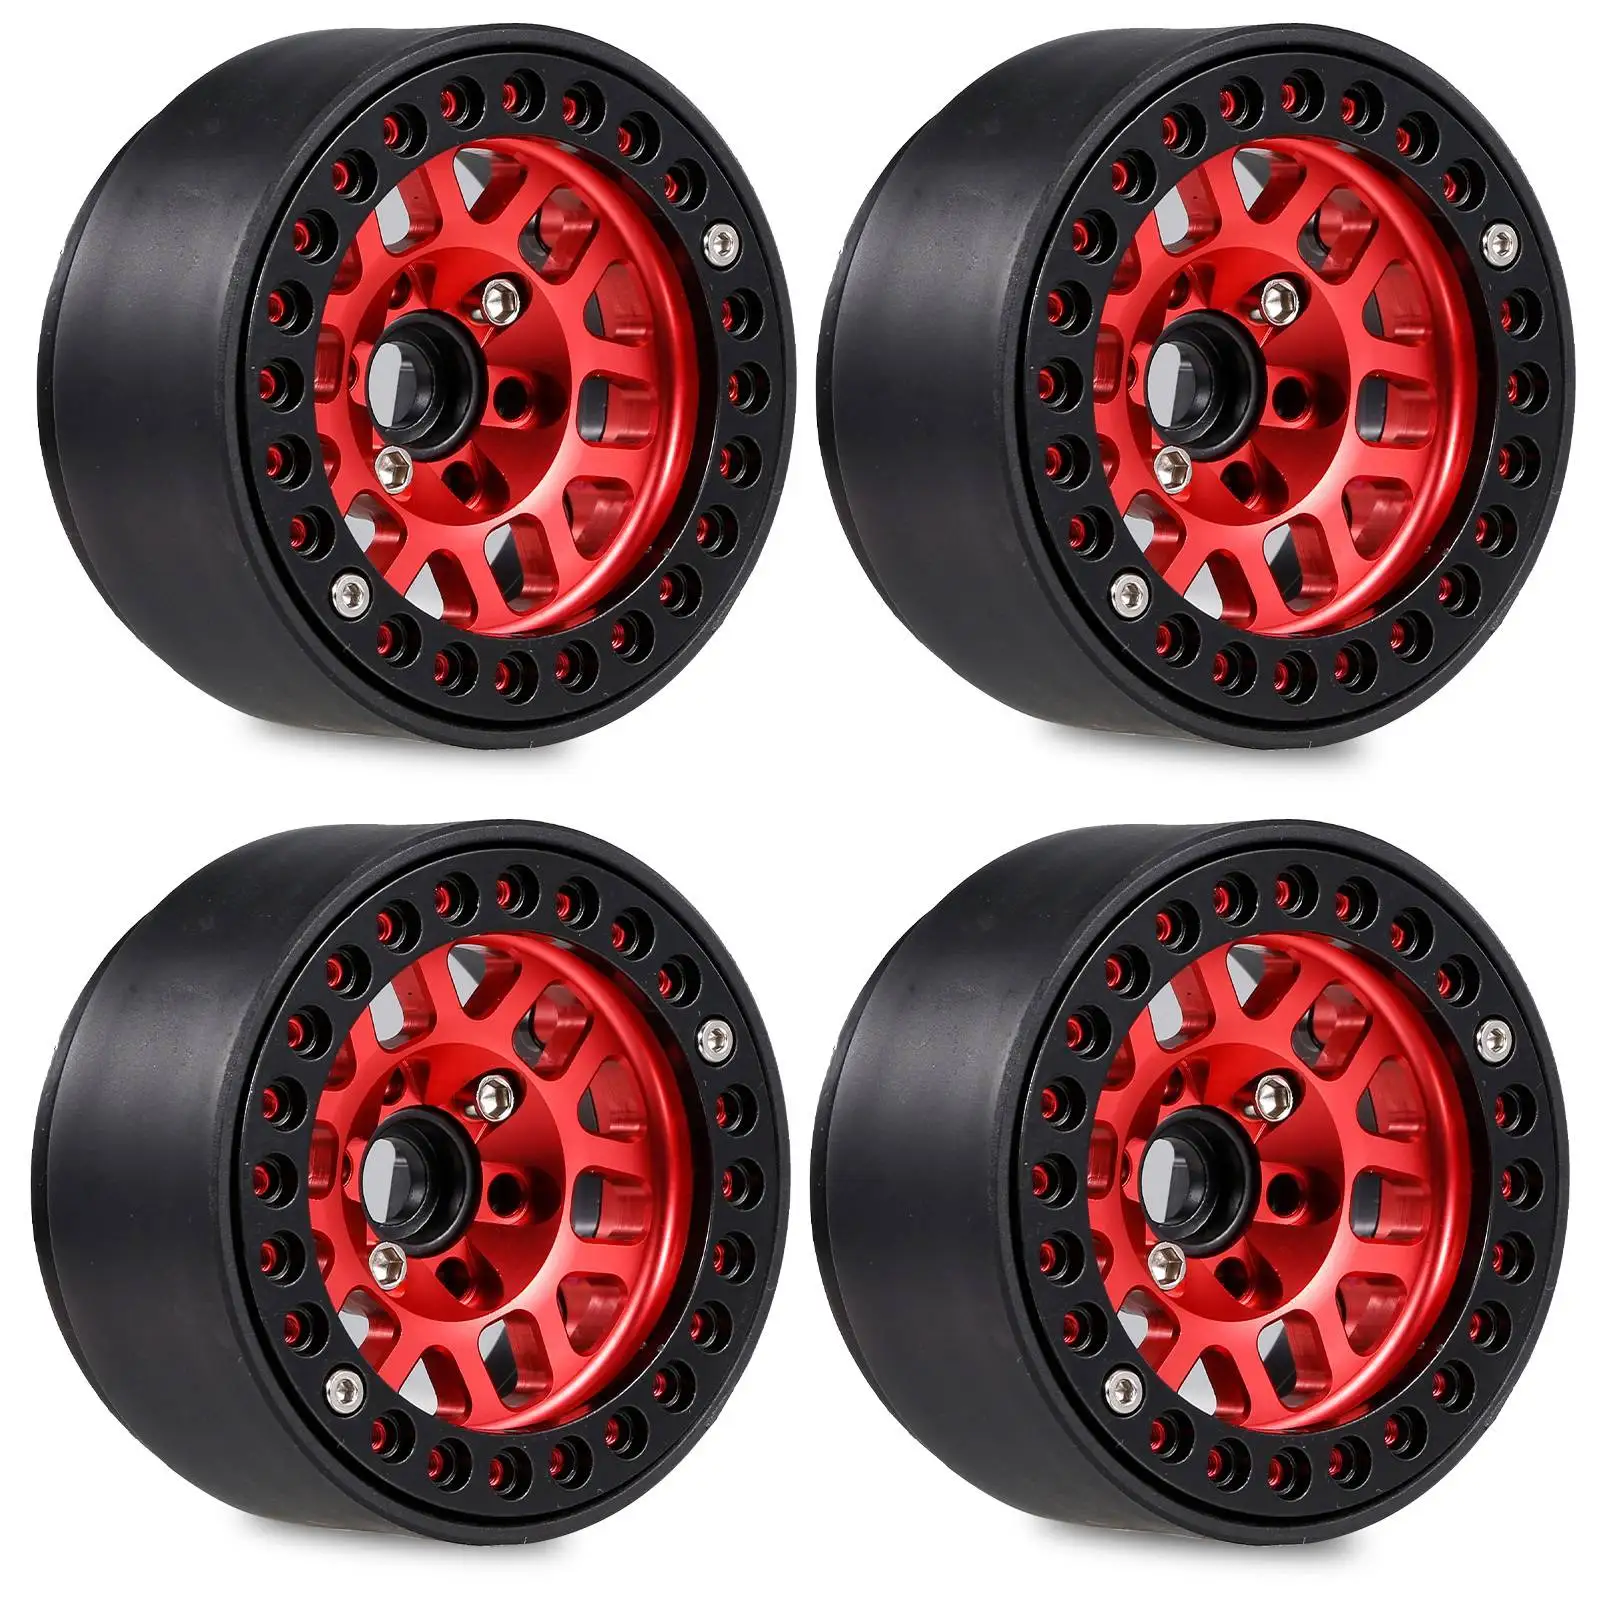 

4PCS 1.9 Metal Beadlock Wheel Hub Rim for 1/10 RC Crawler Axial SCX10 90046 AXI03007 Traxxas TRX4 RedCat D90,Red